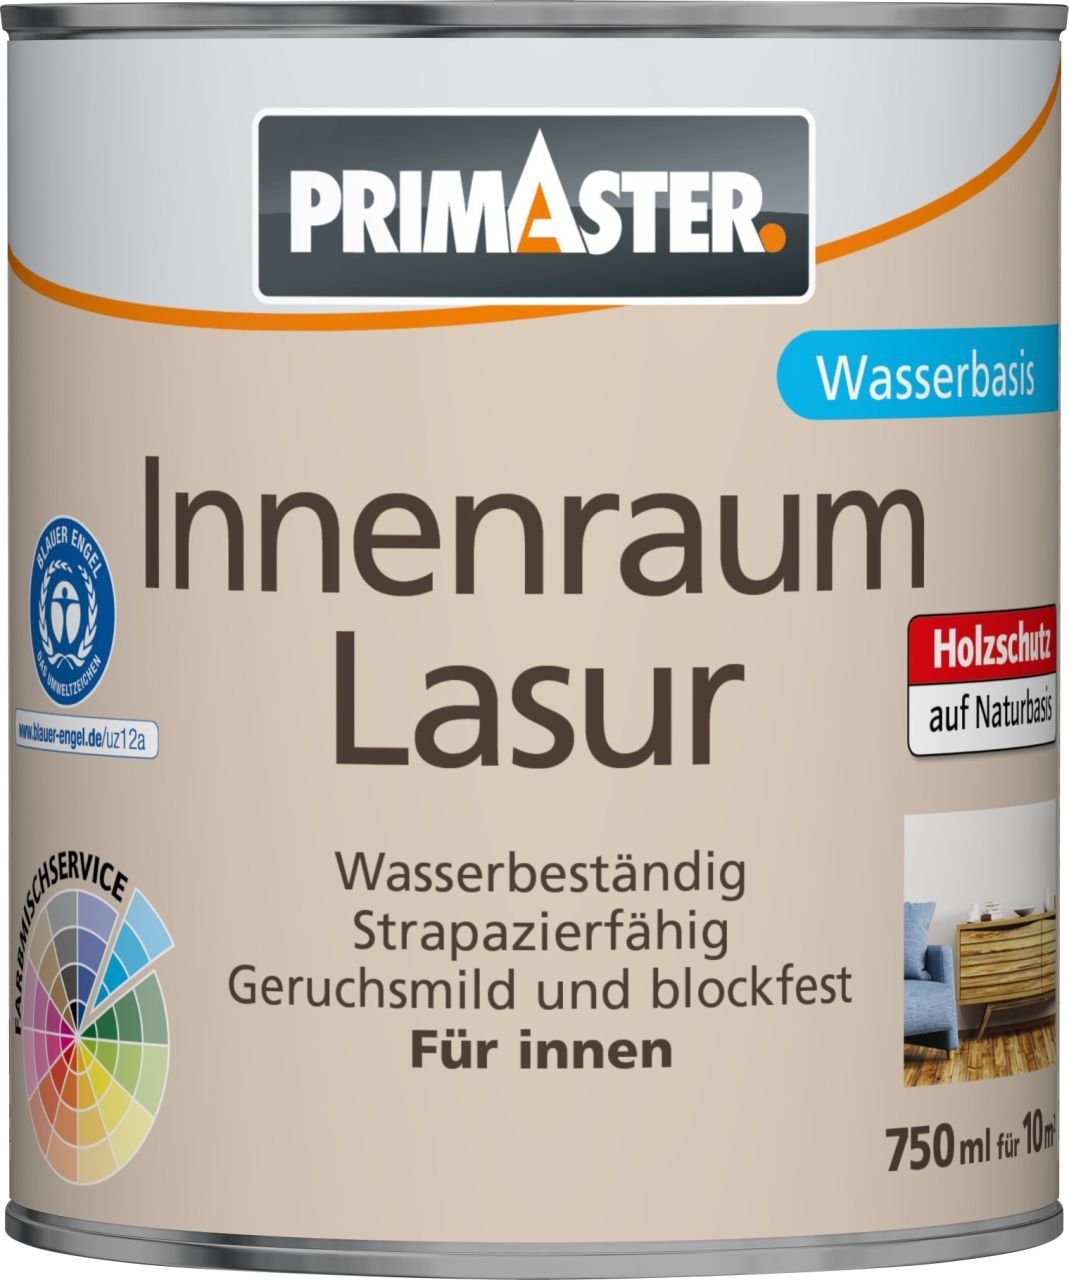 Primaster Primaster ml Lasur farblos 750 Innenraumlasur